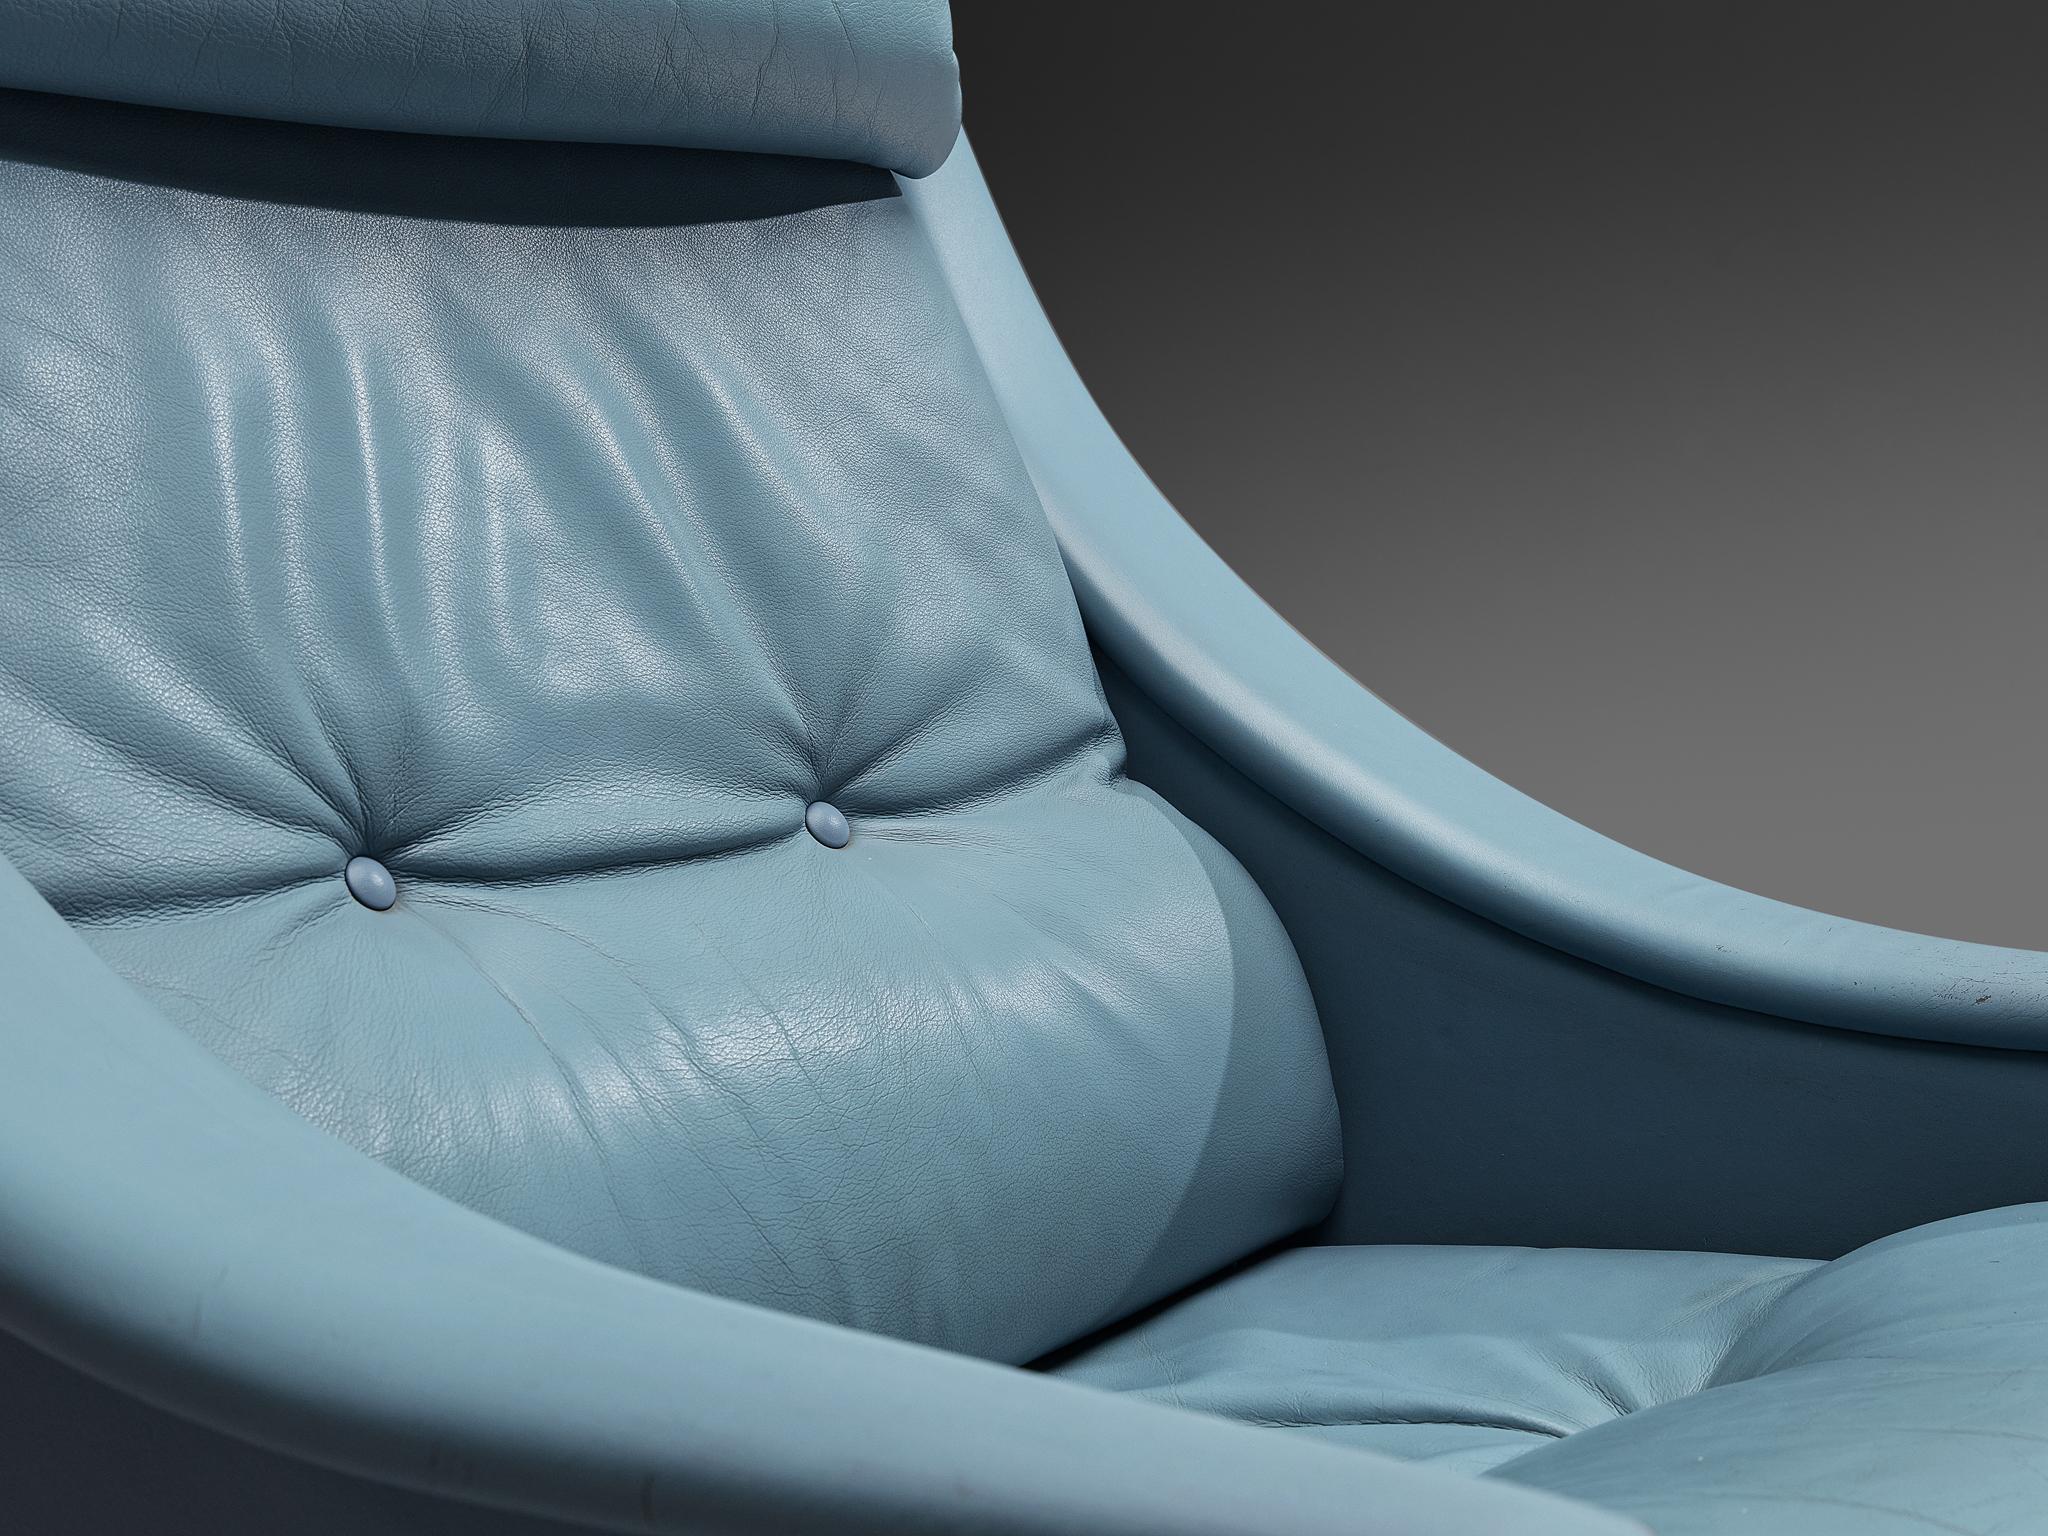 Gio Ponti fauteuil de salon 'Dezza' en cuir bleu clair pour Poltrona Frau en vente 1